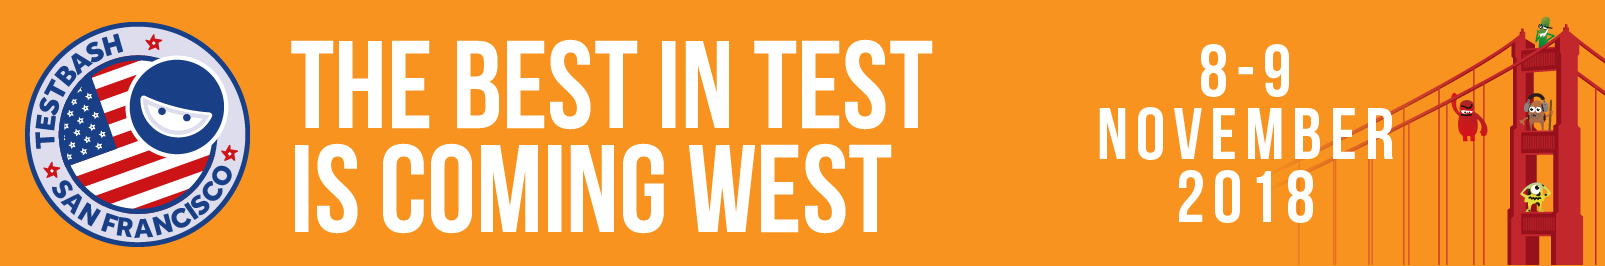 TestBash San Francisco 2018 banner image